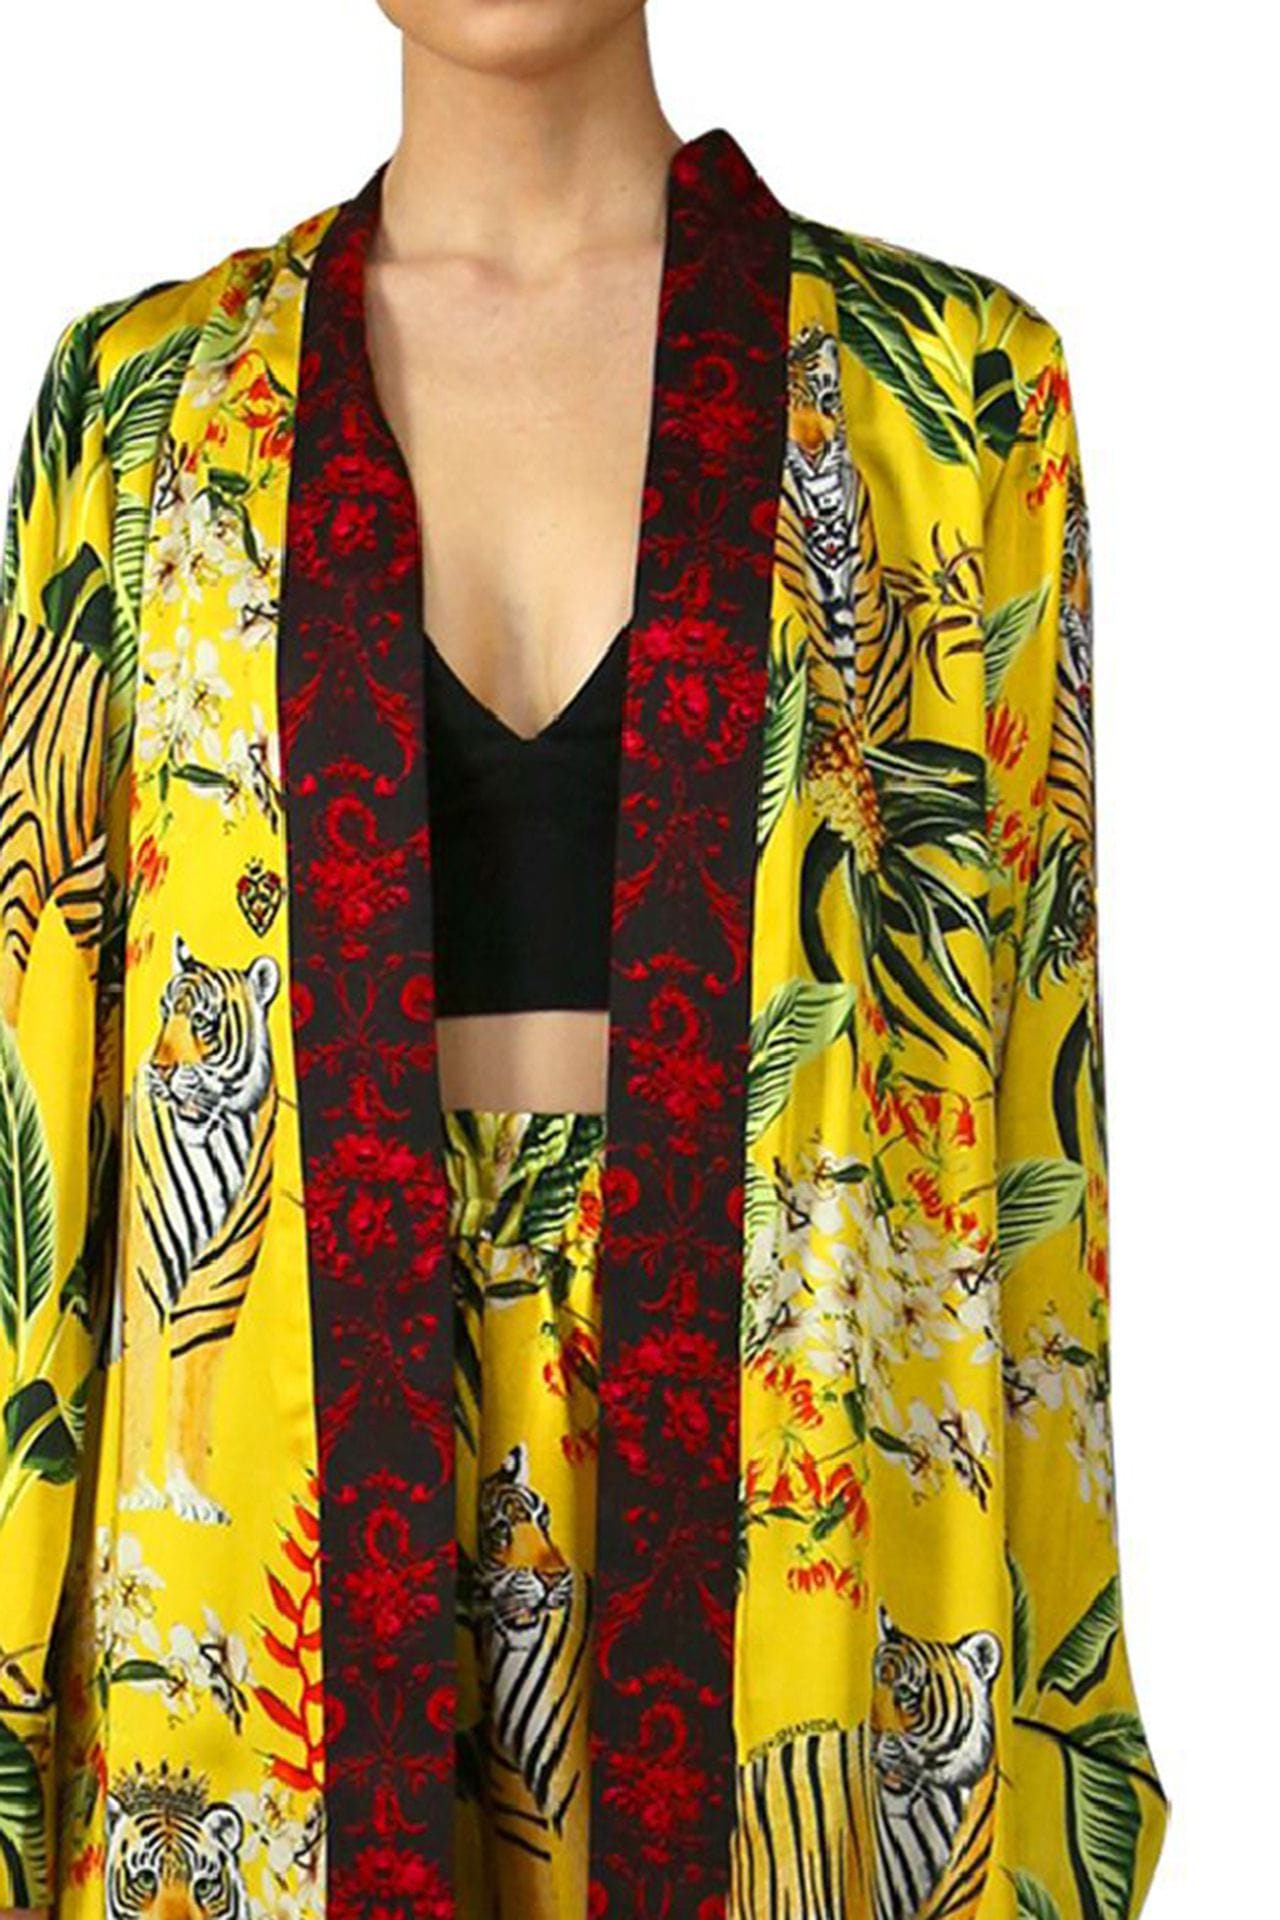 "Kyle X Shahida" "silk yellow robe" "silk robes and kimonos" "long floral robe" "silk kimono robes for women"